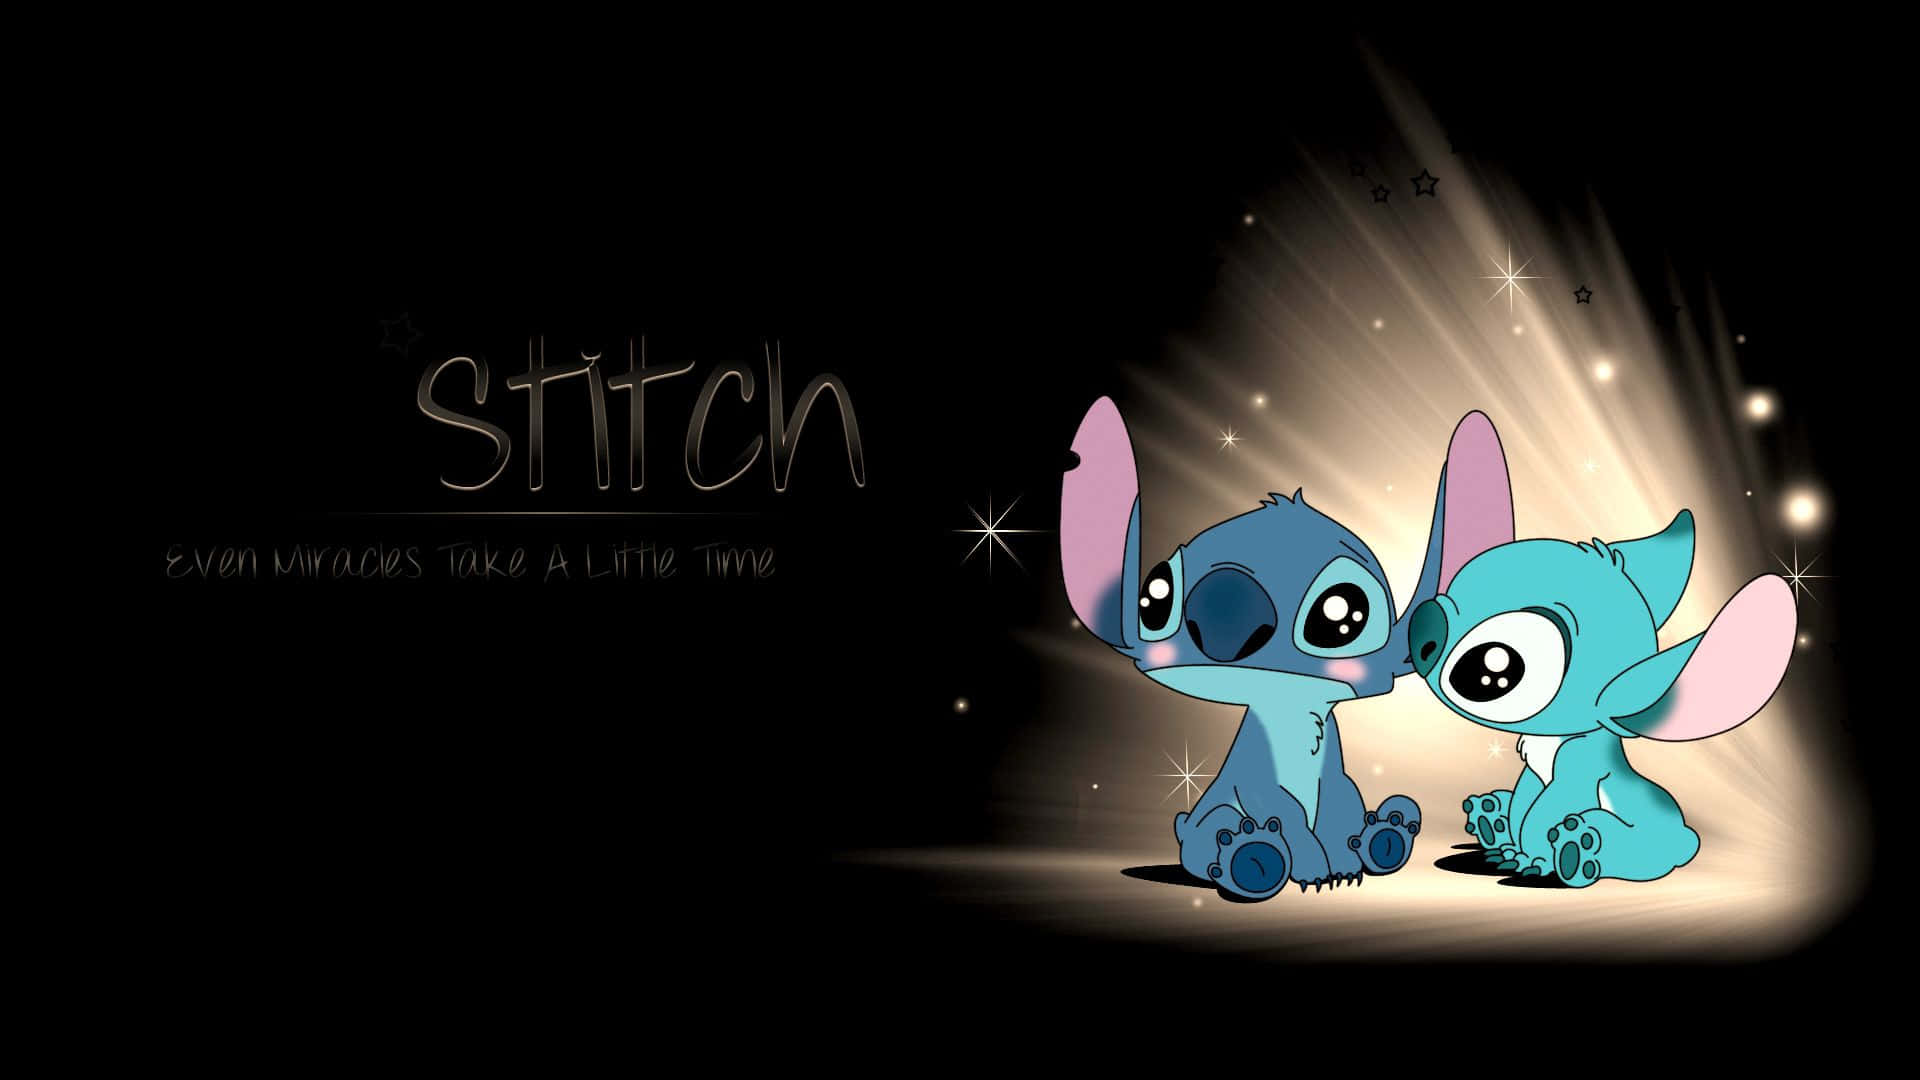 Bienvenidoa Un Mundo De Diversión Encantadora Con Stitch.